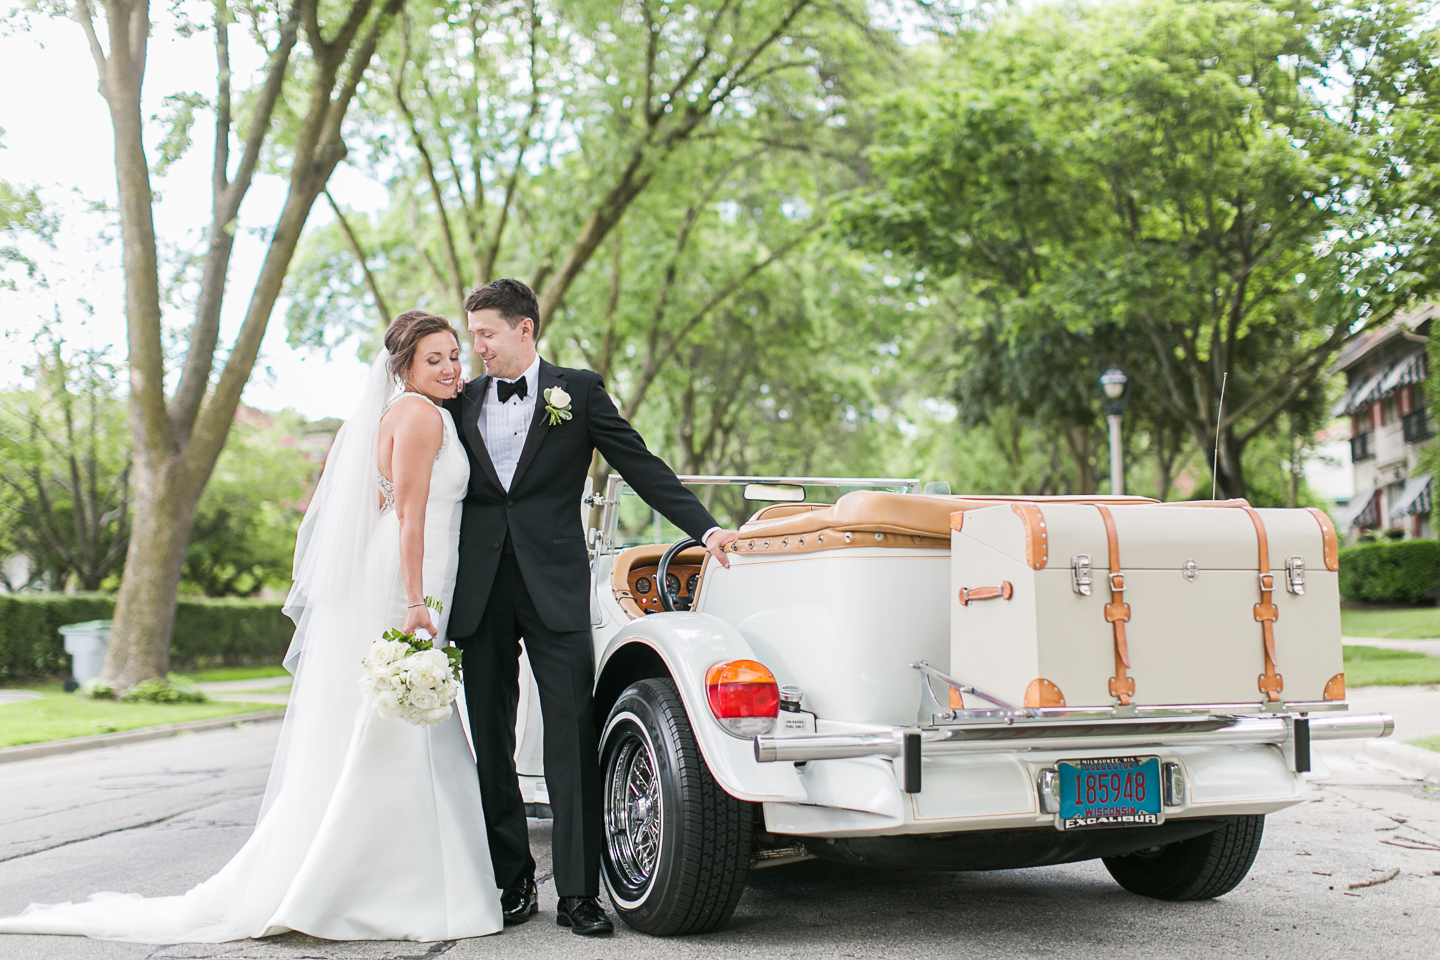  Everything Your Brunch Wedding Needs | Wisconsin Bride